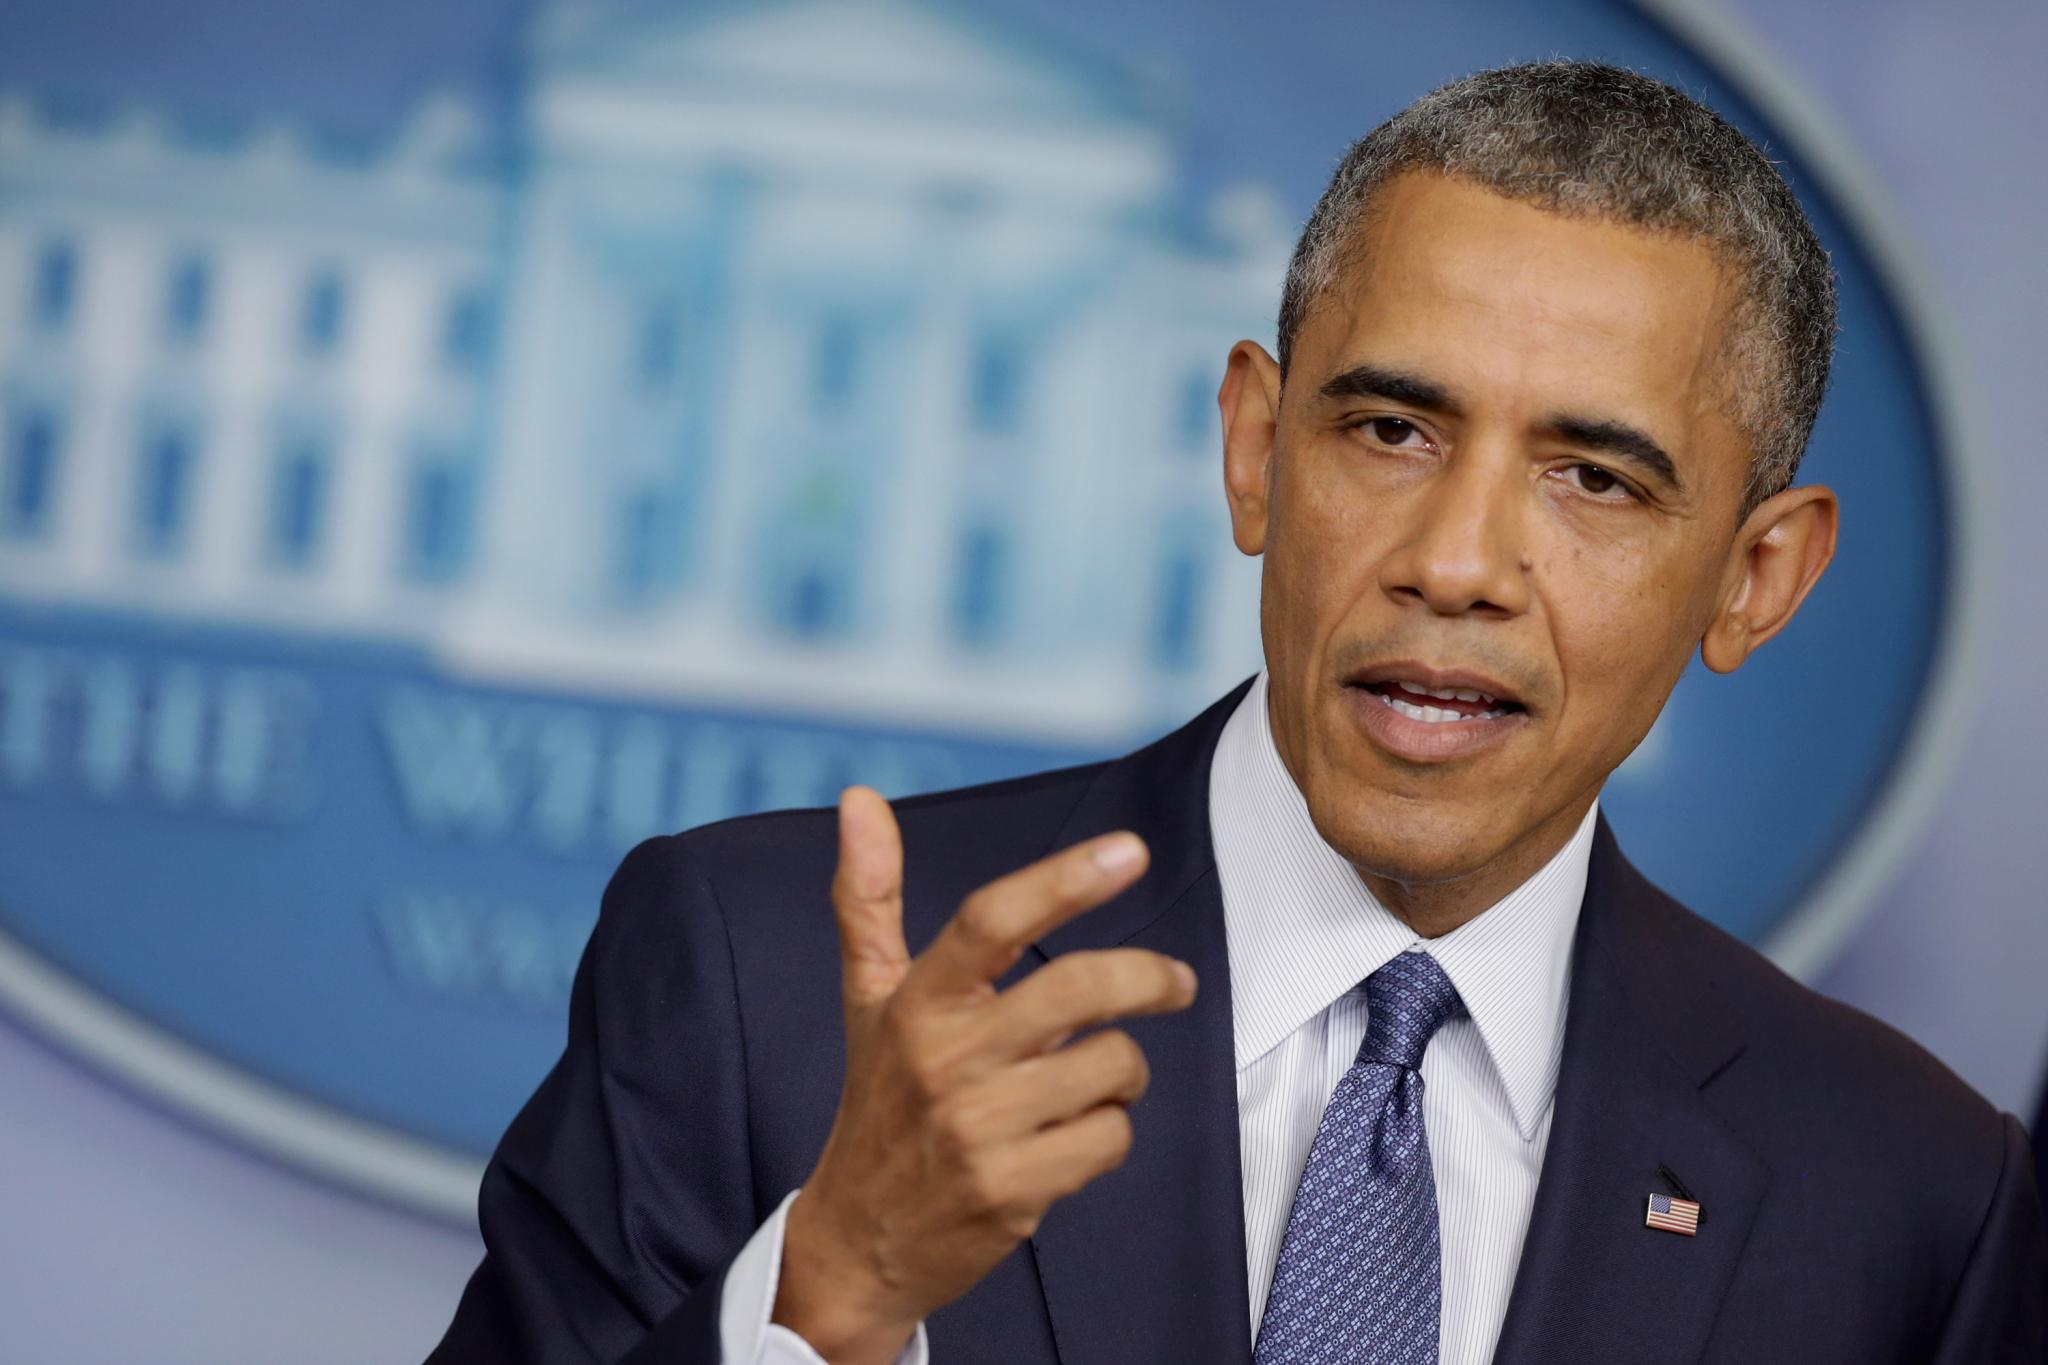 President Obama Defends Colin Kaepernick's Right To Protest
